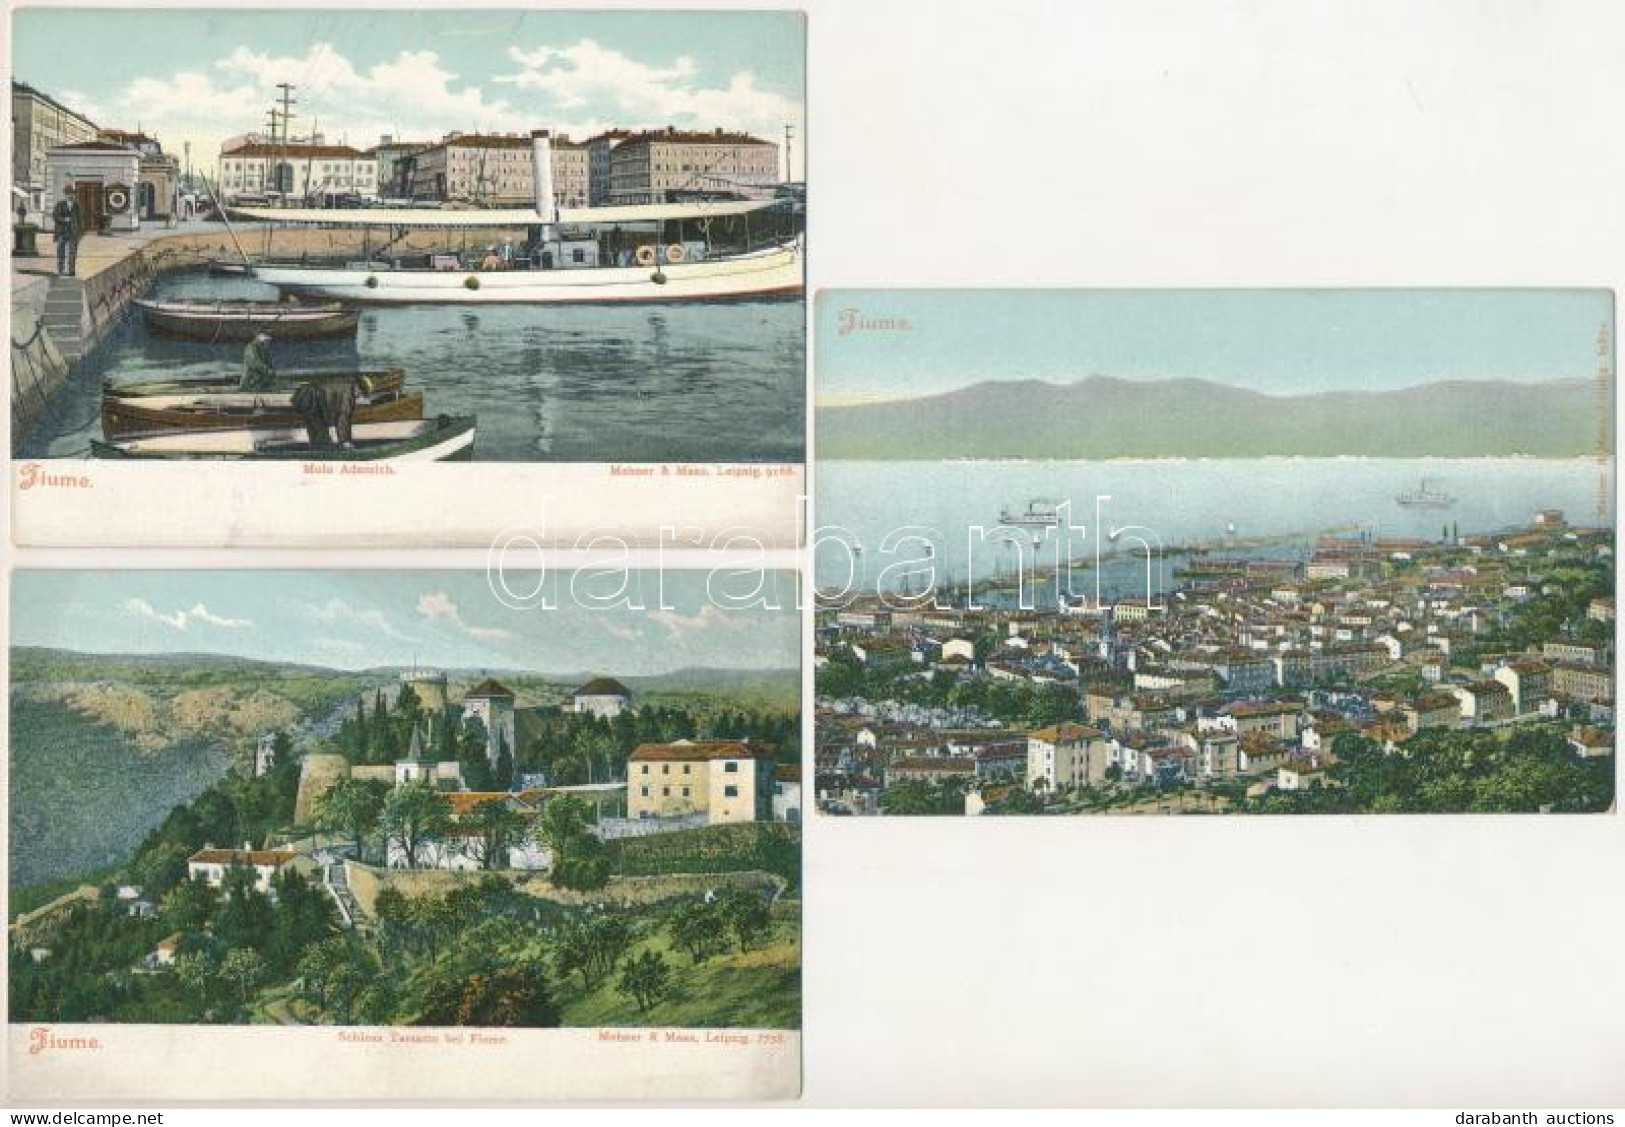 ** Fiume, Rijeka; - 3 Db Régi Hosszú Címzéses Képeslap / 3 Pre-1900 Postcards - Non Classés